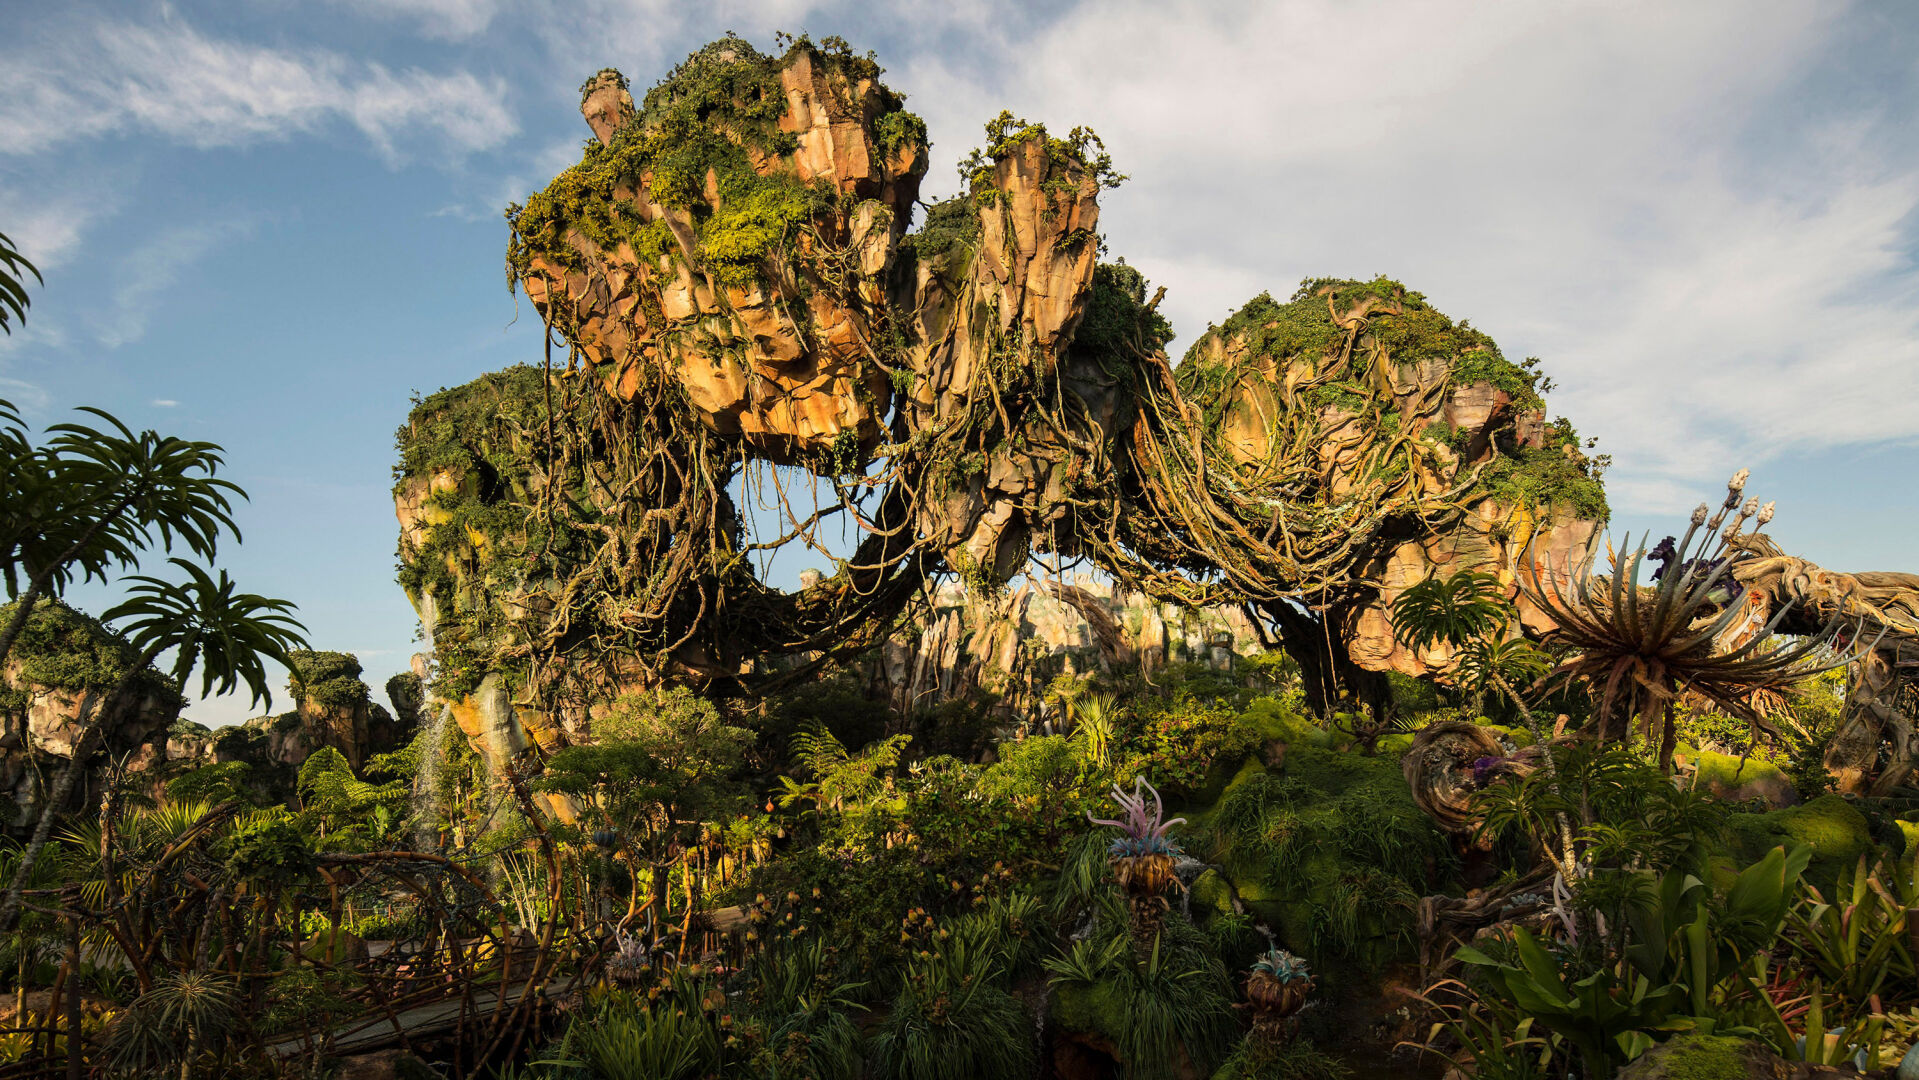 Walt Disney World unveils Pandora land the newest park based on Avatar   Fox News